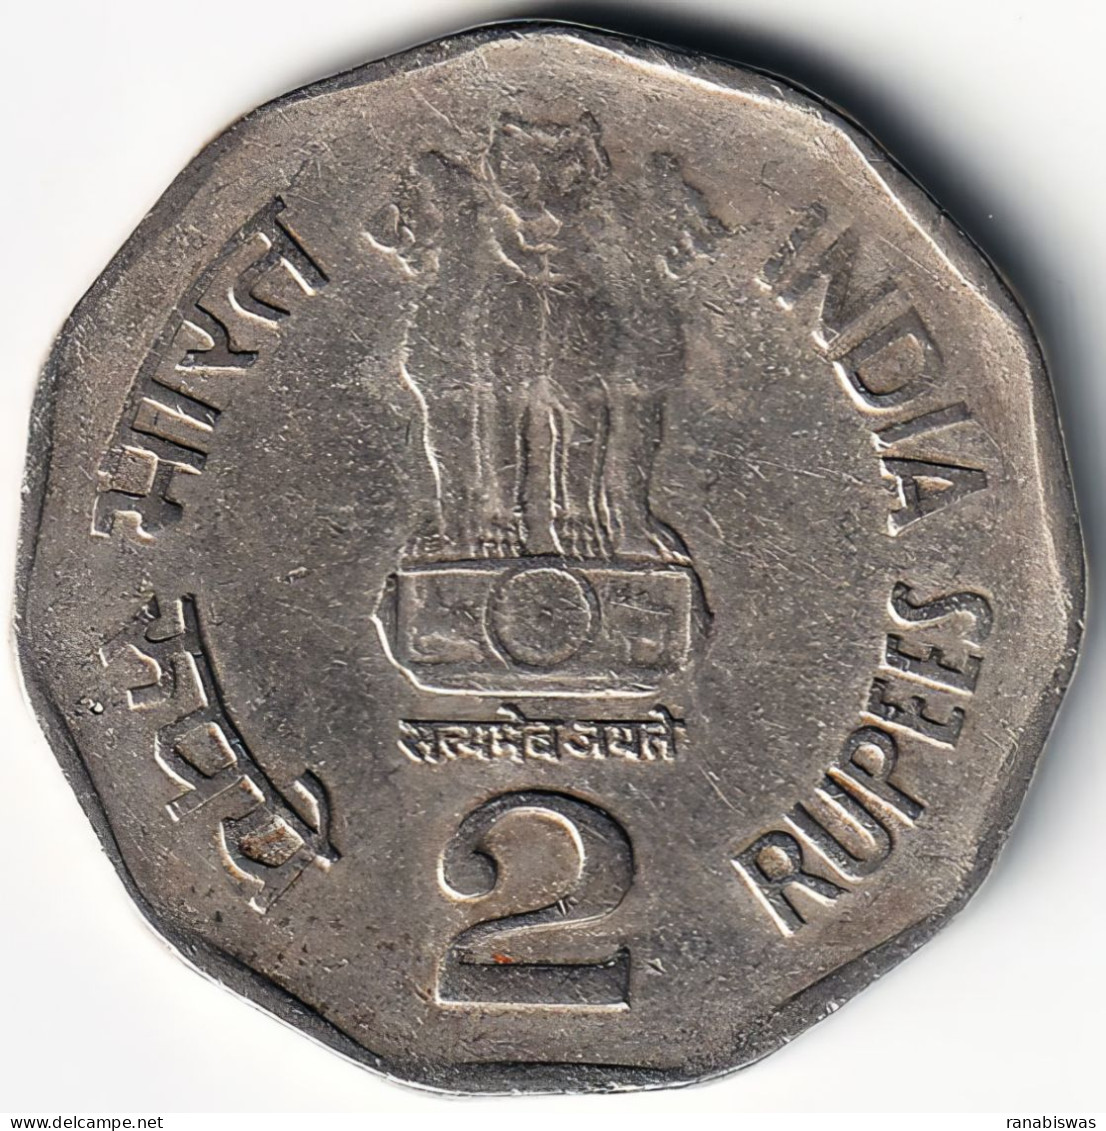 INDIA COIN LOT 121, 2 RUPEES 1999, CHHATRAPATI SHIVAJI, NOIDA MINT, XF, SCARE - Inde